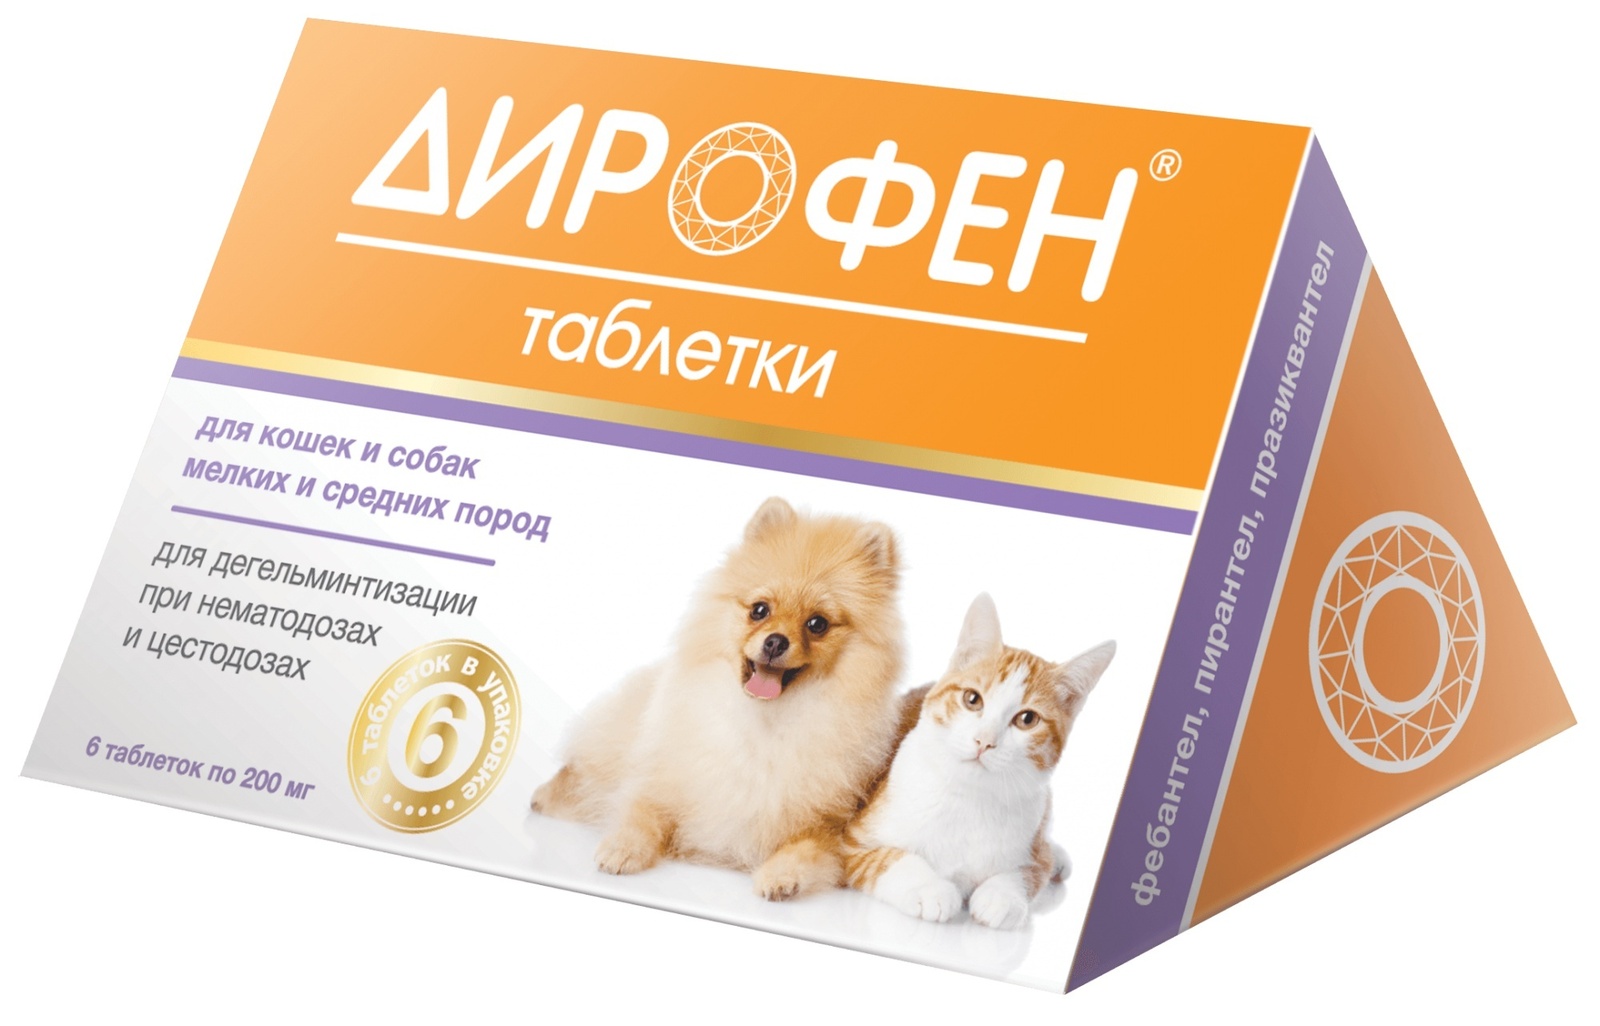 Apicenna Apicenna дирофен плюс таблетки от глистов для кошек и собак (11 г)